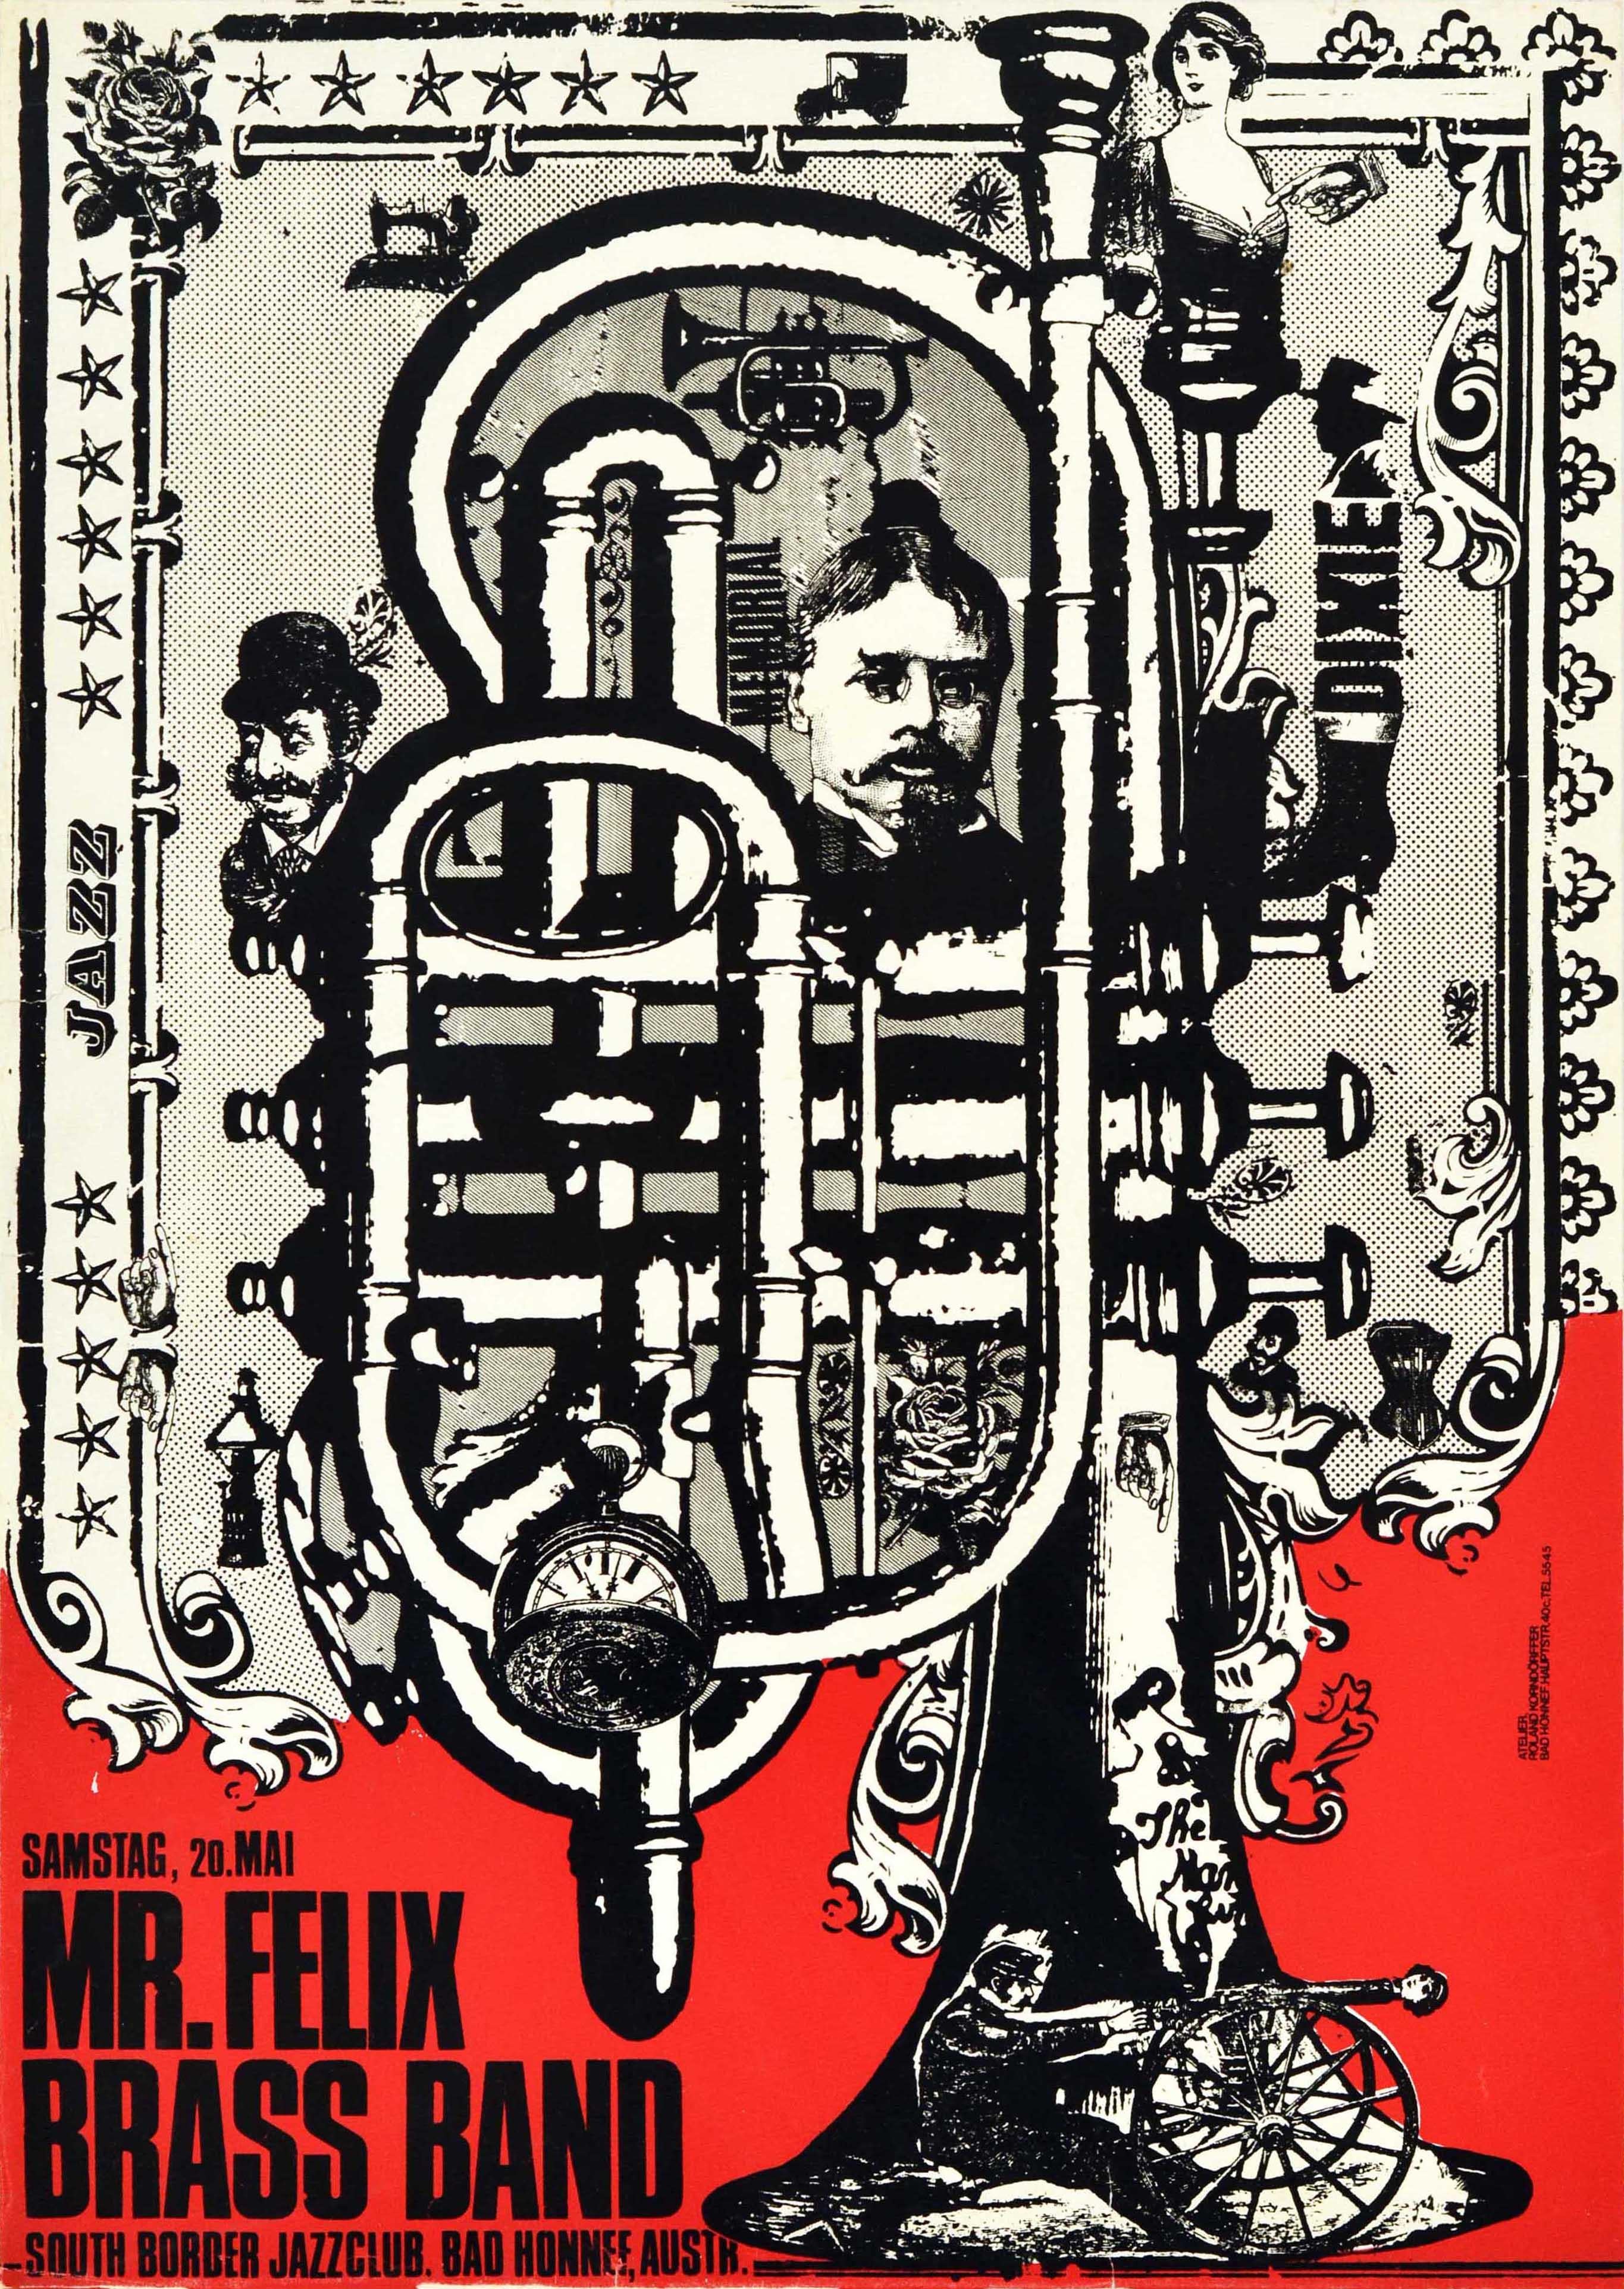 Unknown Print – Original-Vintage-Musikplakat Felix Brass Band South Border Jazz Club Dixie